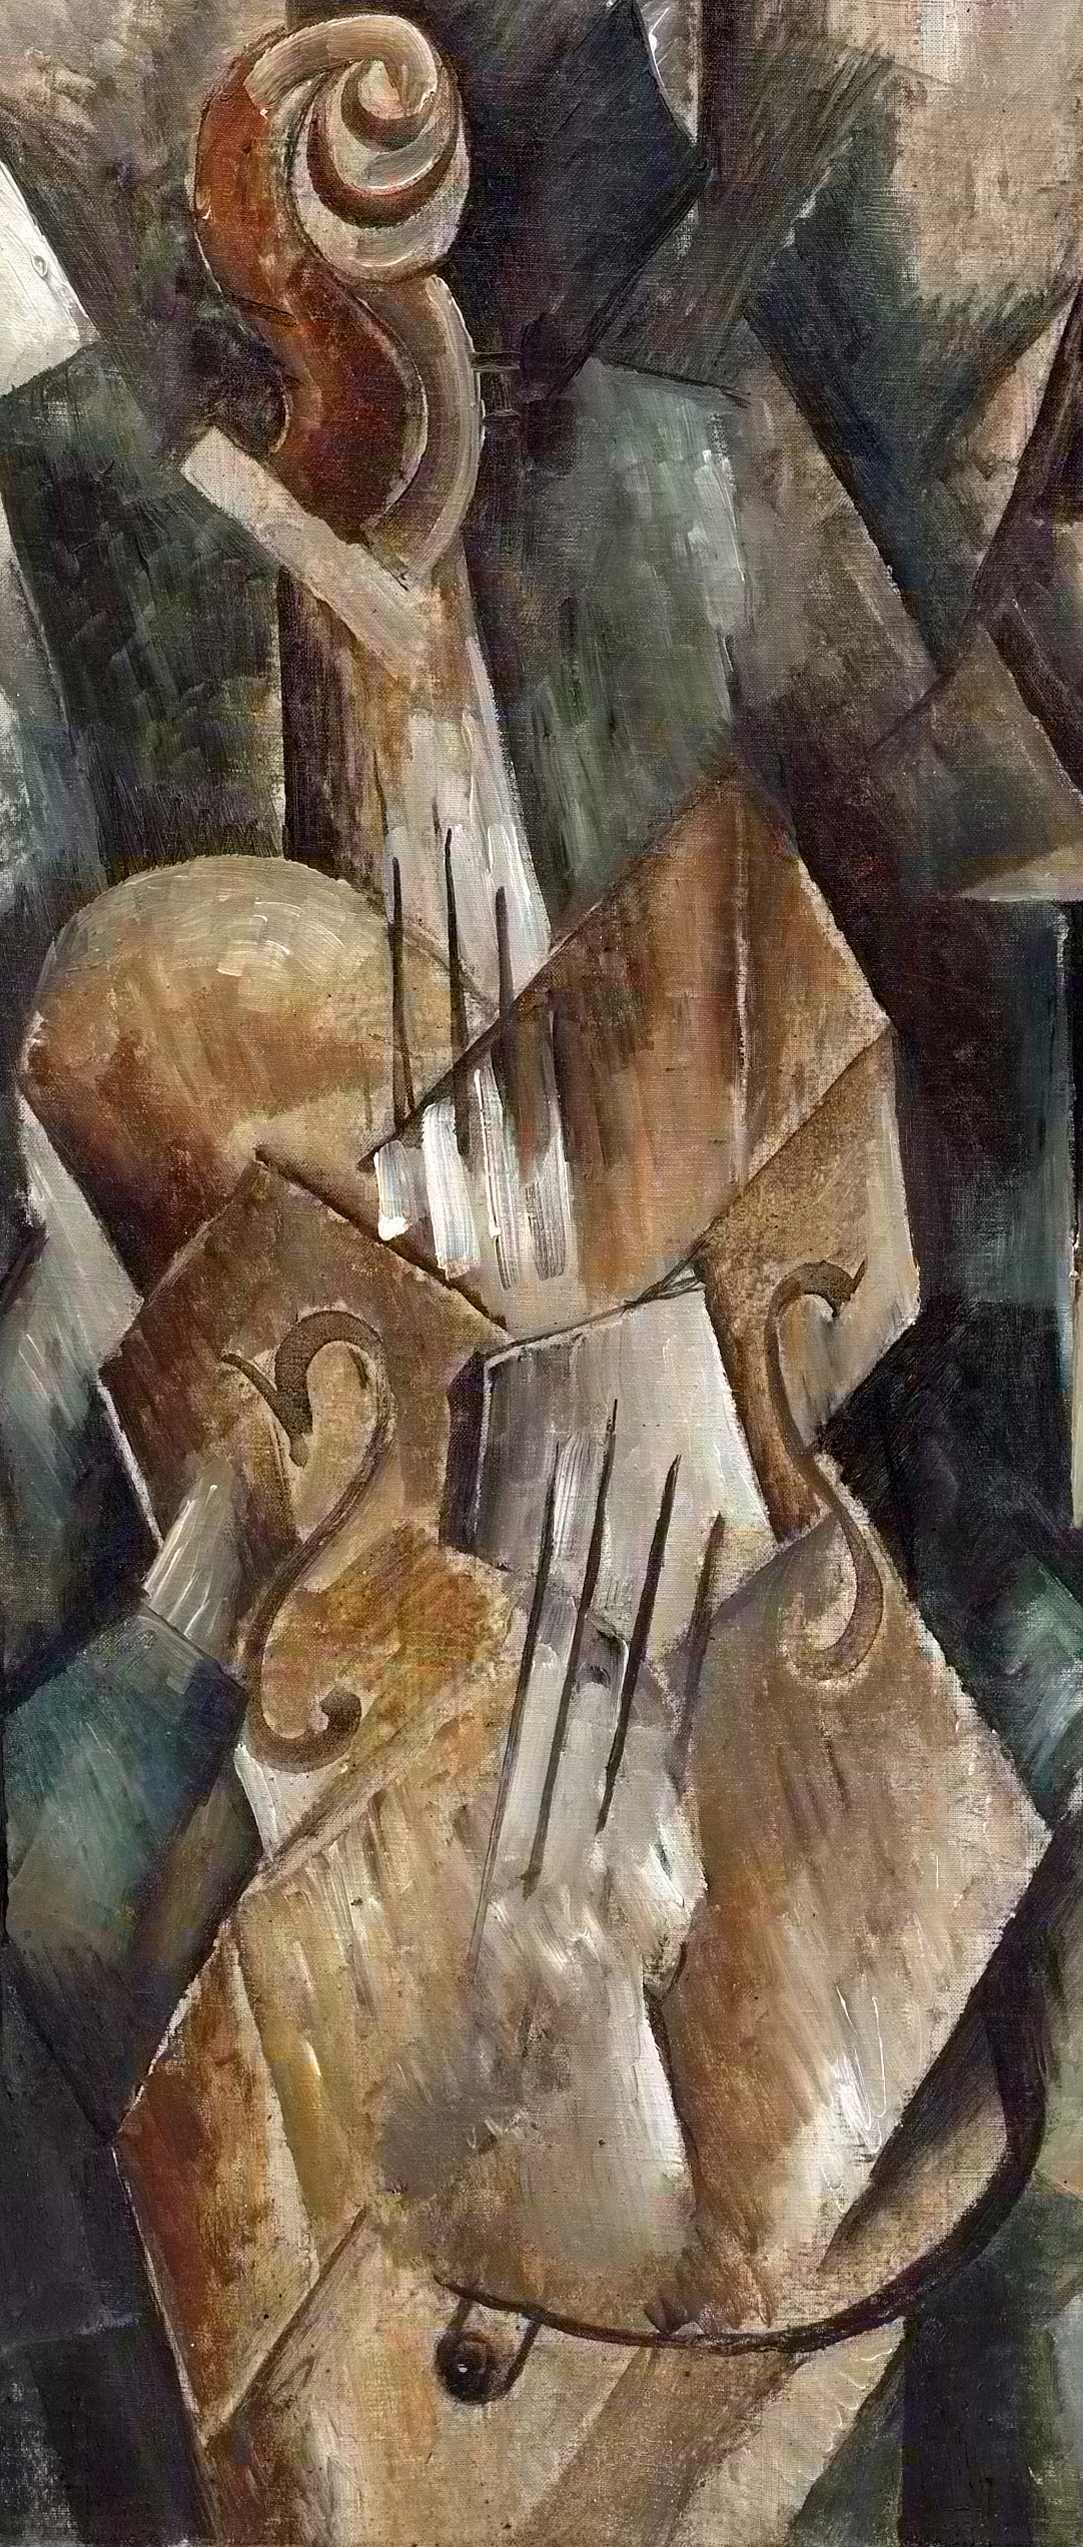 Georges Braque, Violin and Palette, detail, 1909 (Solomon R. Guggenheim Museum, New York)